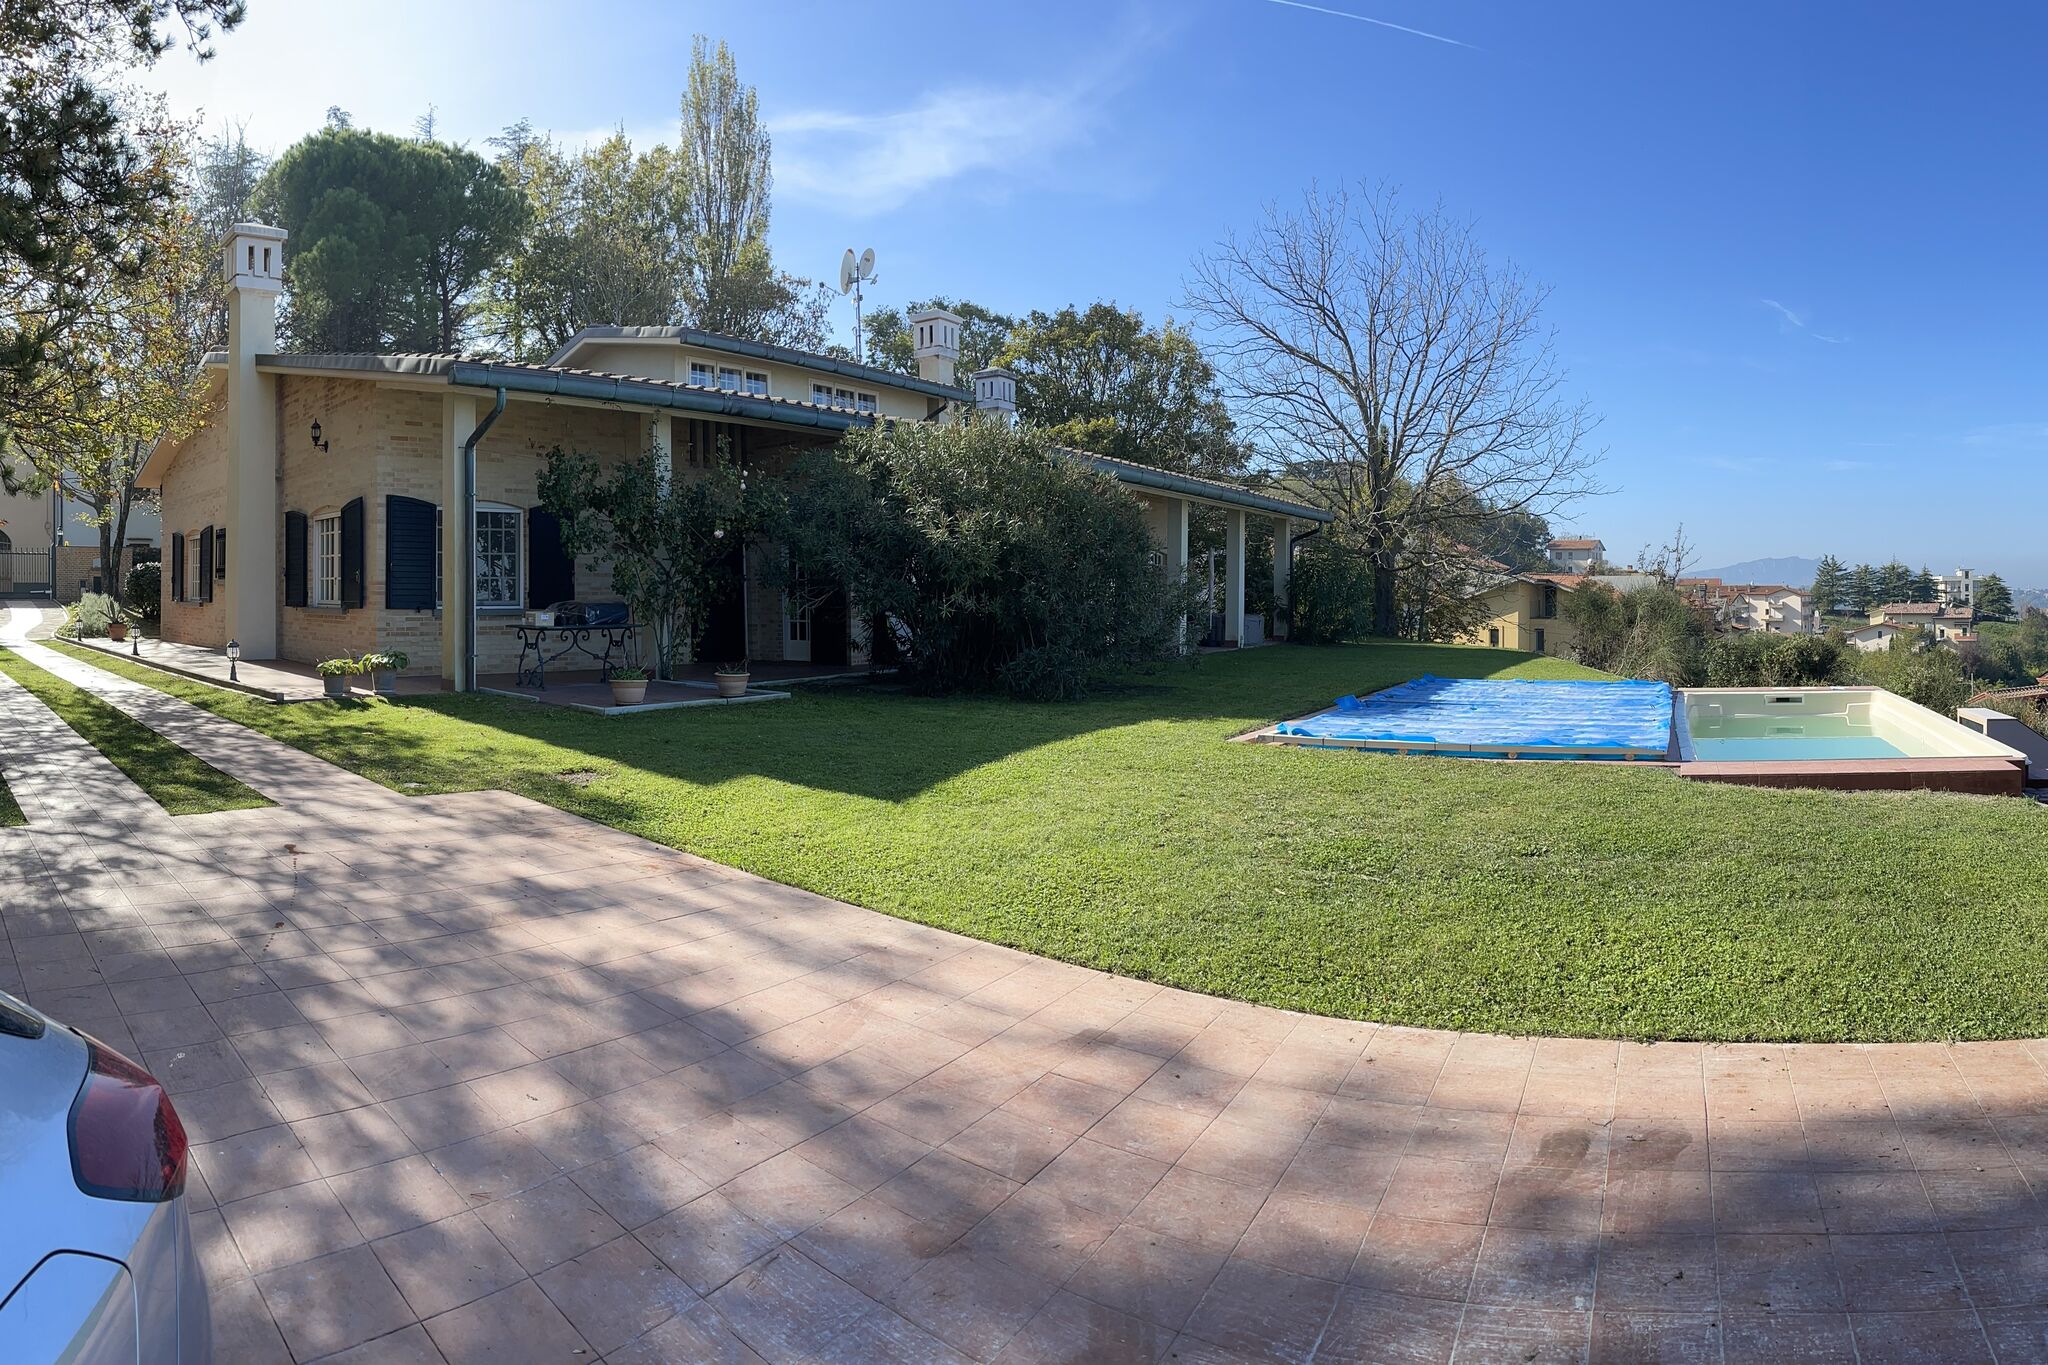 Beautiful villa in Gemmano with jacuzzi and swimmingpool